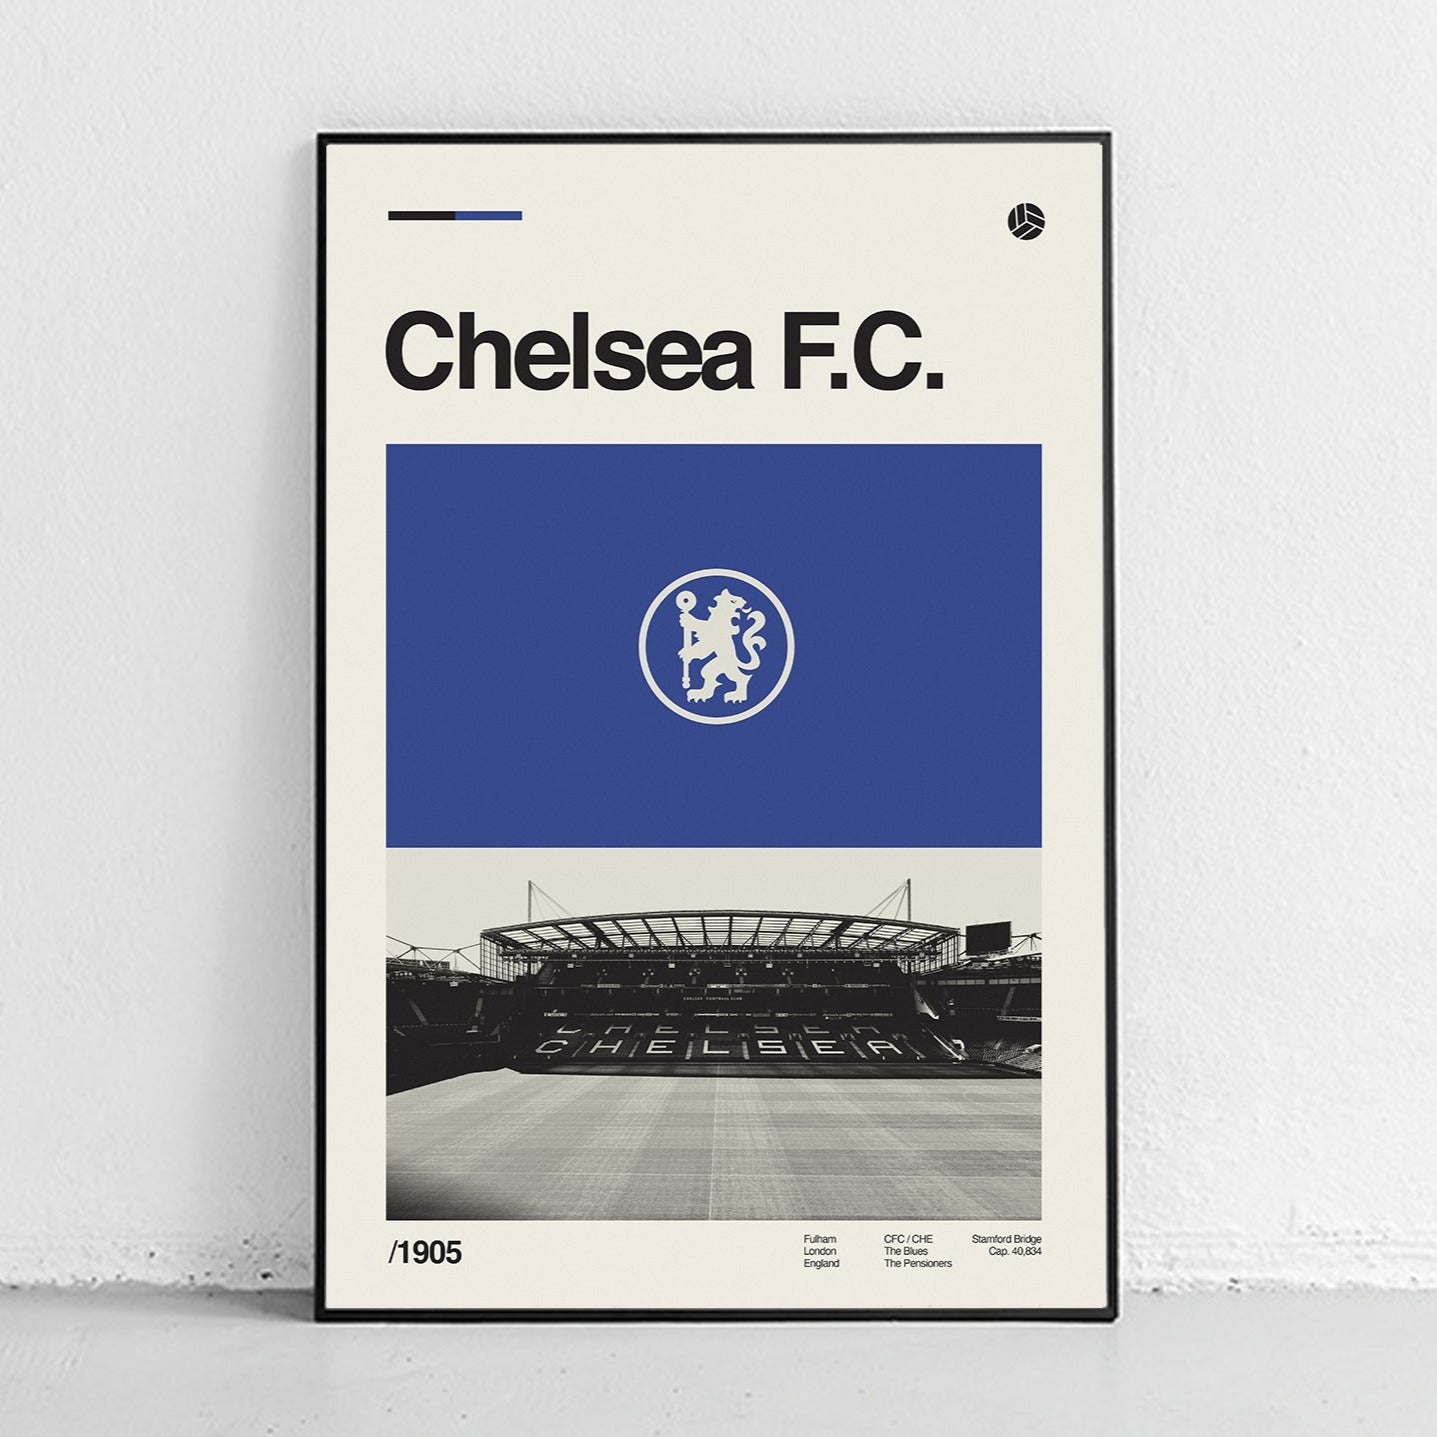 Chelsea FC – Stamford Bridge (The Blues)